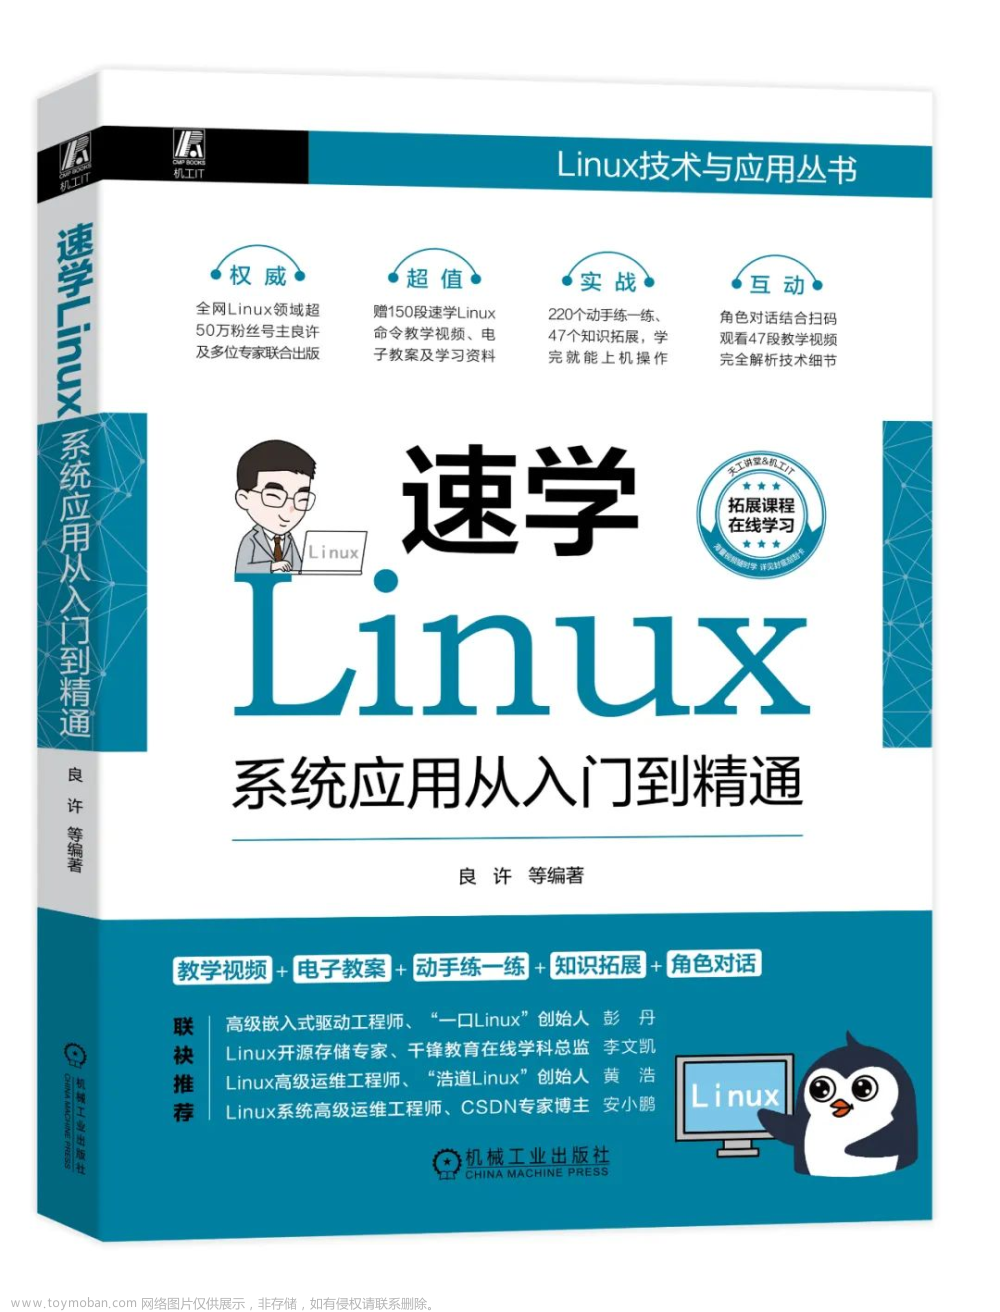 crontab服务,# Linux,服务器,运维,linux,云计算